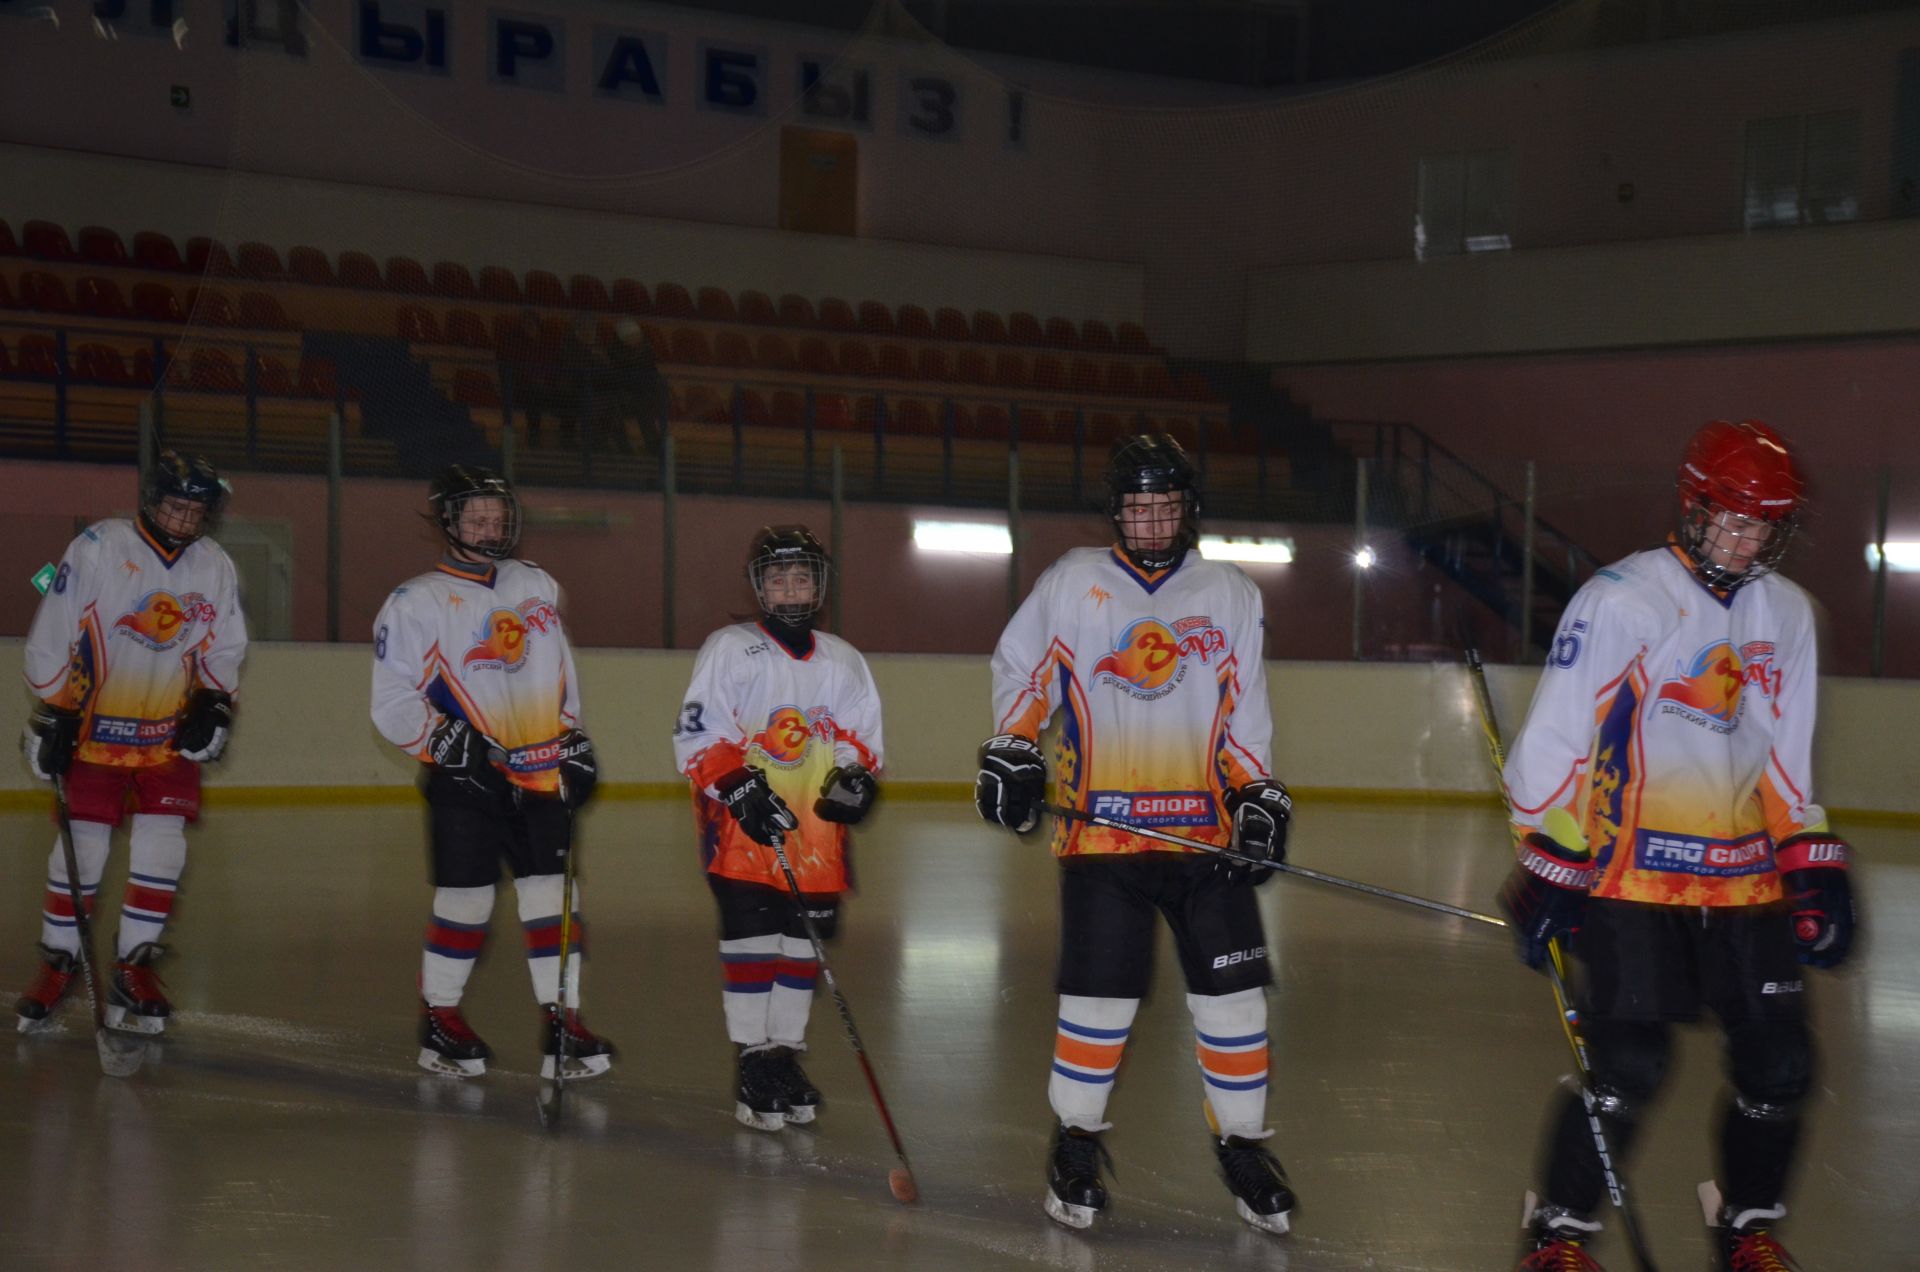 Бүген Әгерҗедә “Водоканал“ ширкәте призына хоккей турниры уза